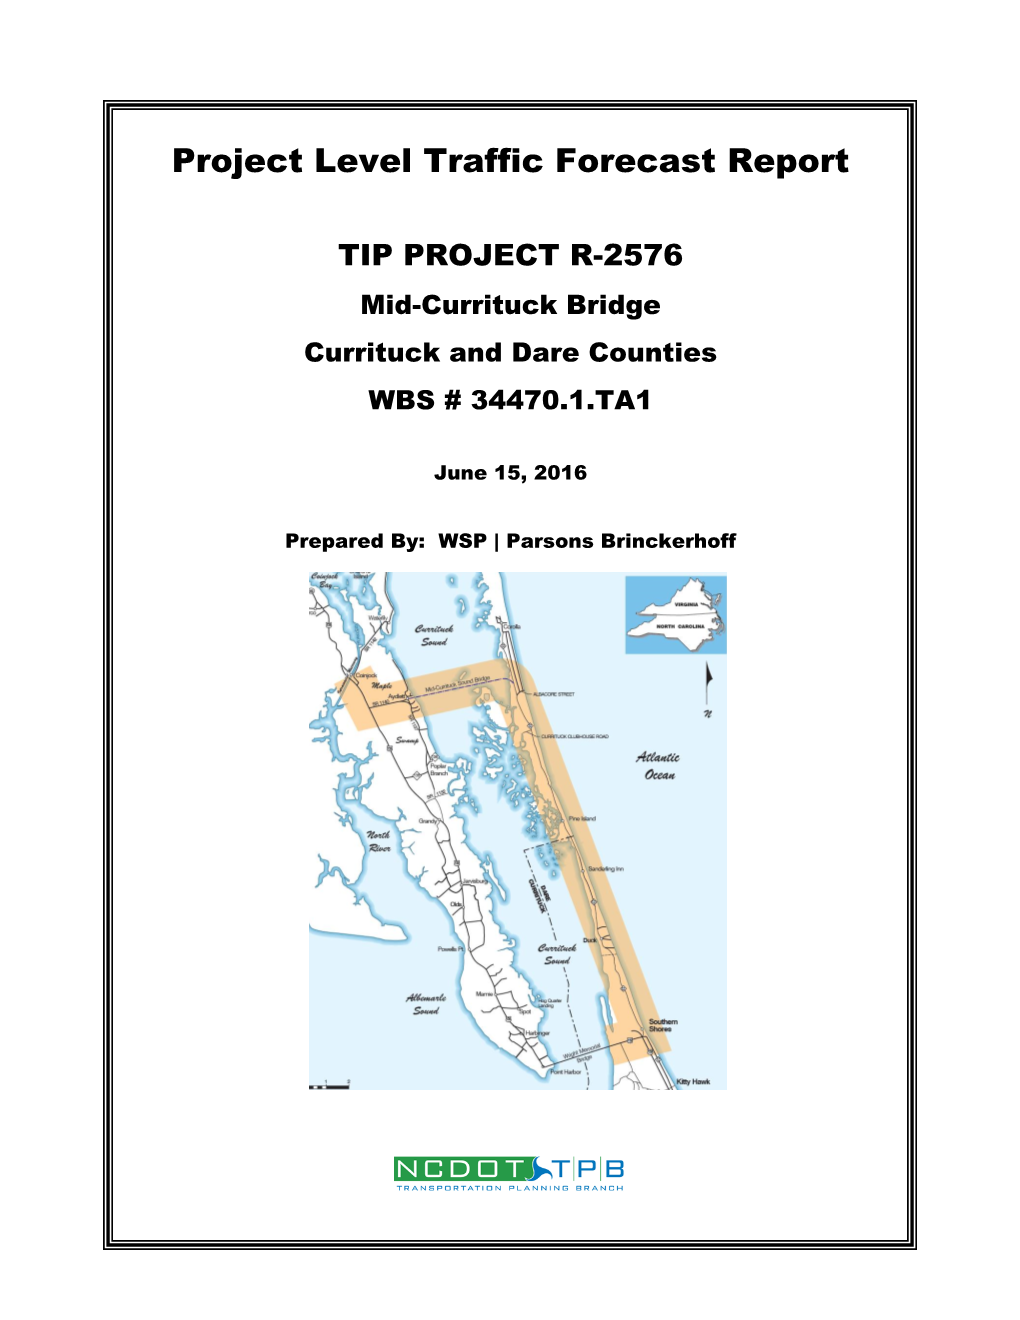 Mid-Currituck Bridge Project Level Traffic Forecast Report (June 2016)